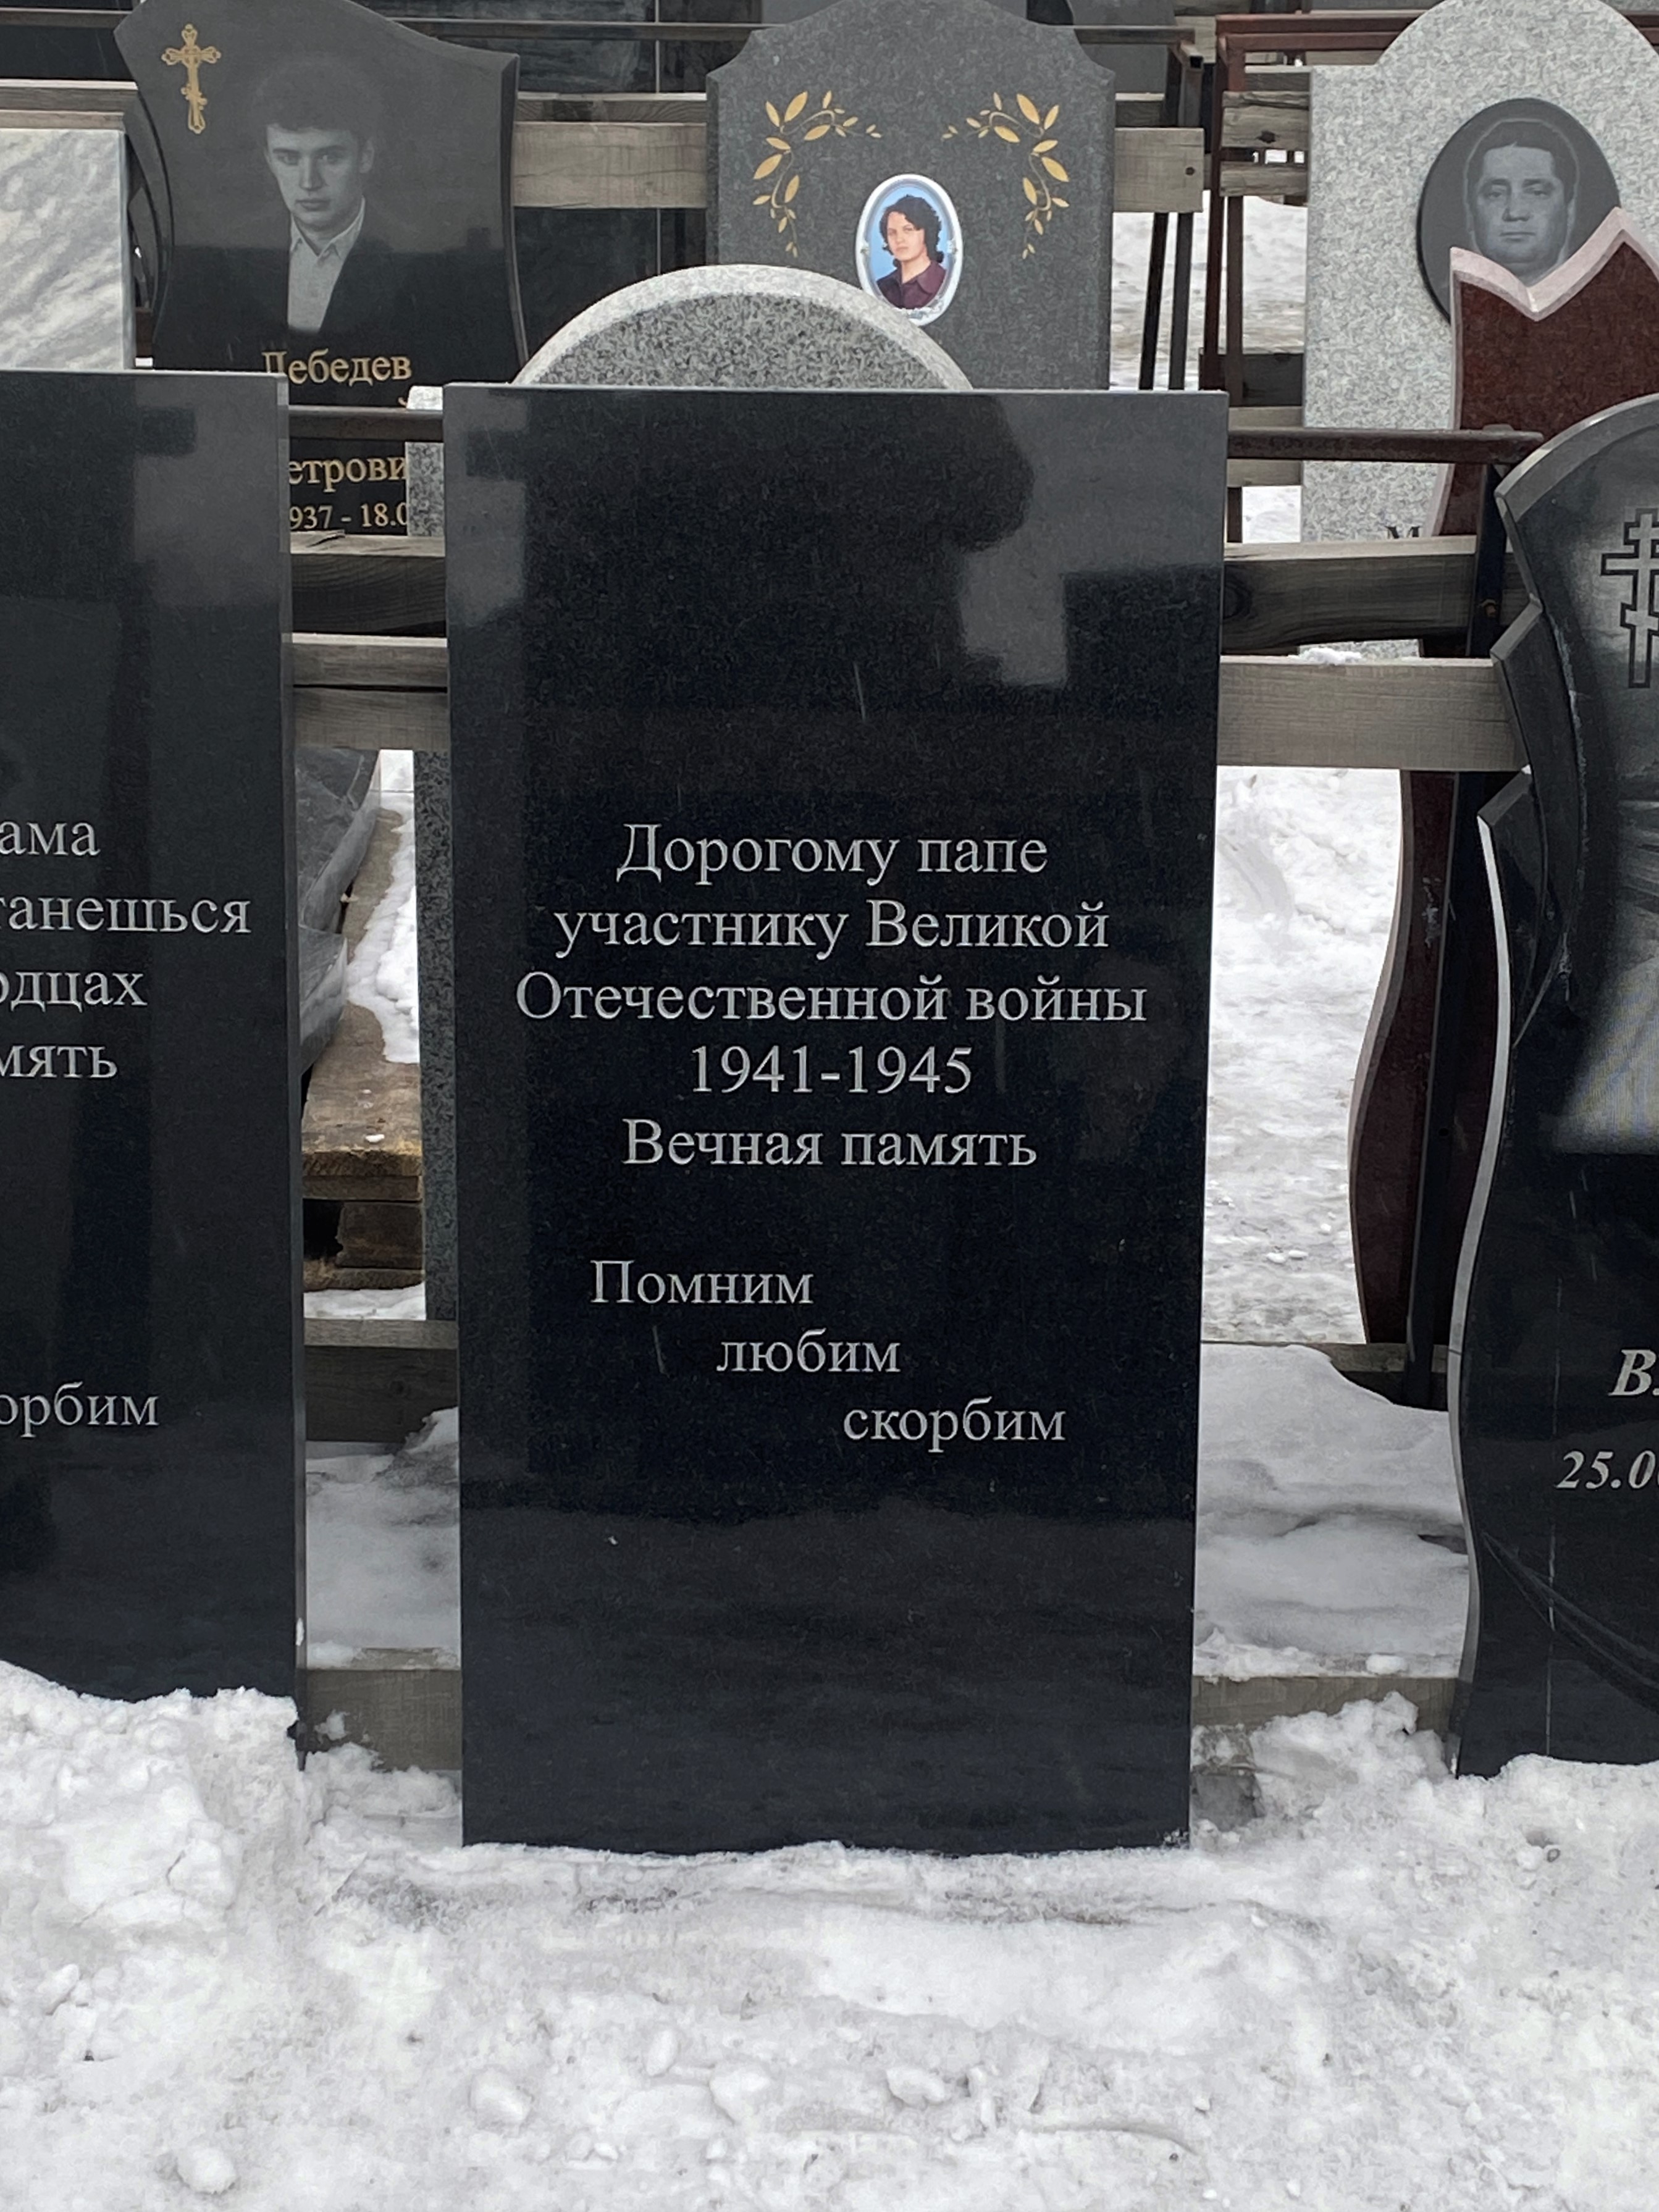 Памятники на могилу в Ижевске - Гранит памяти